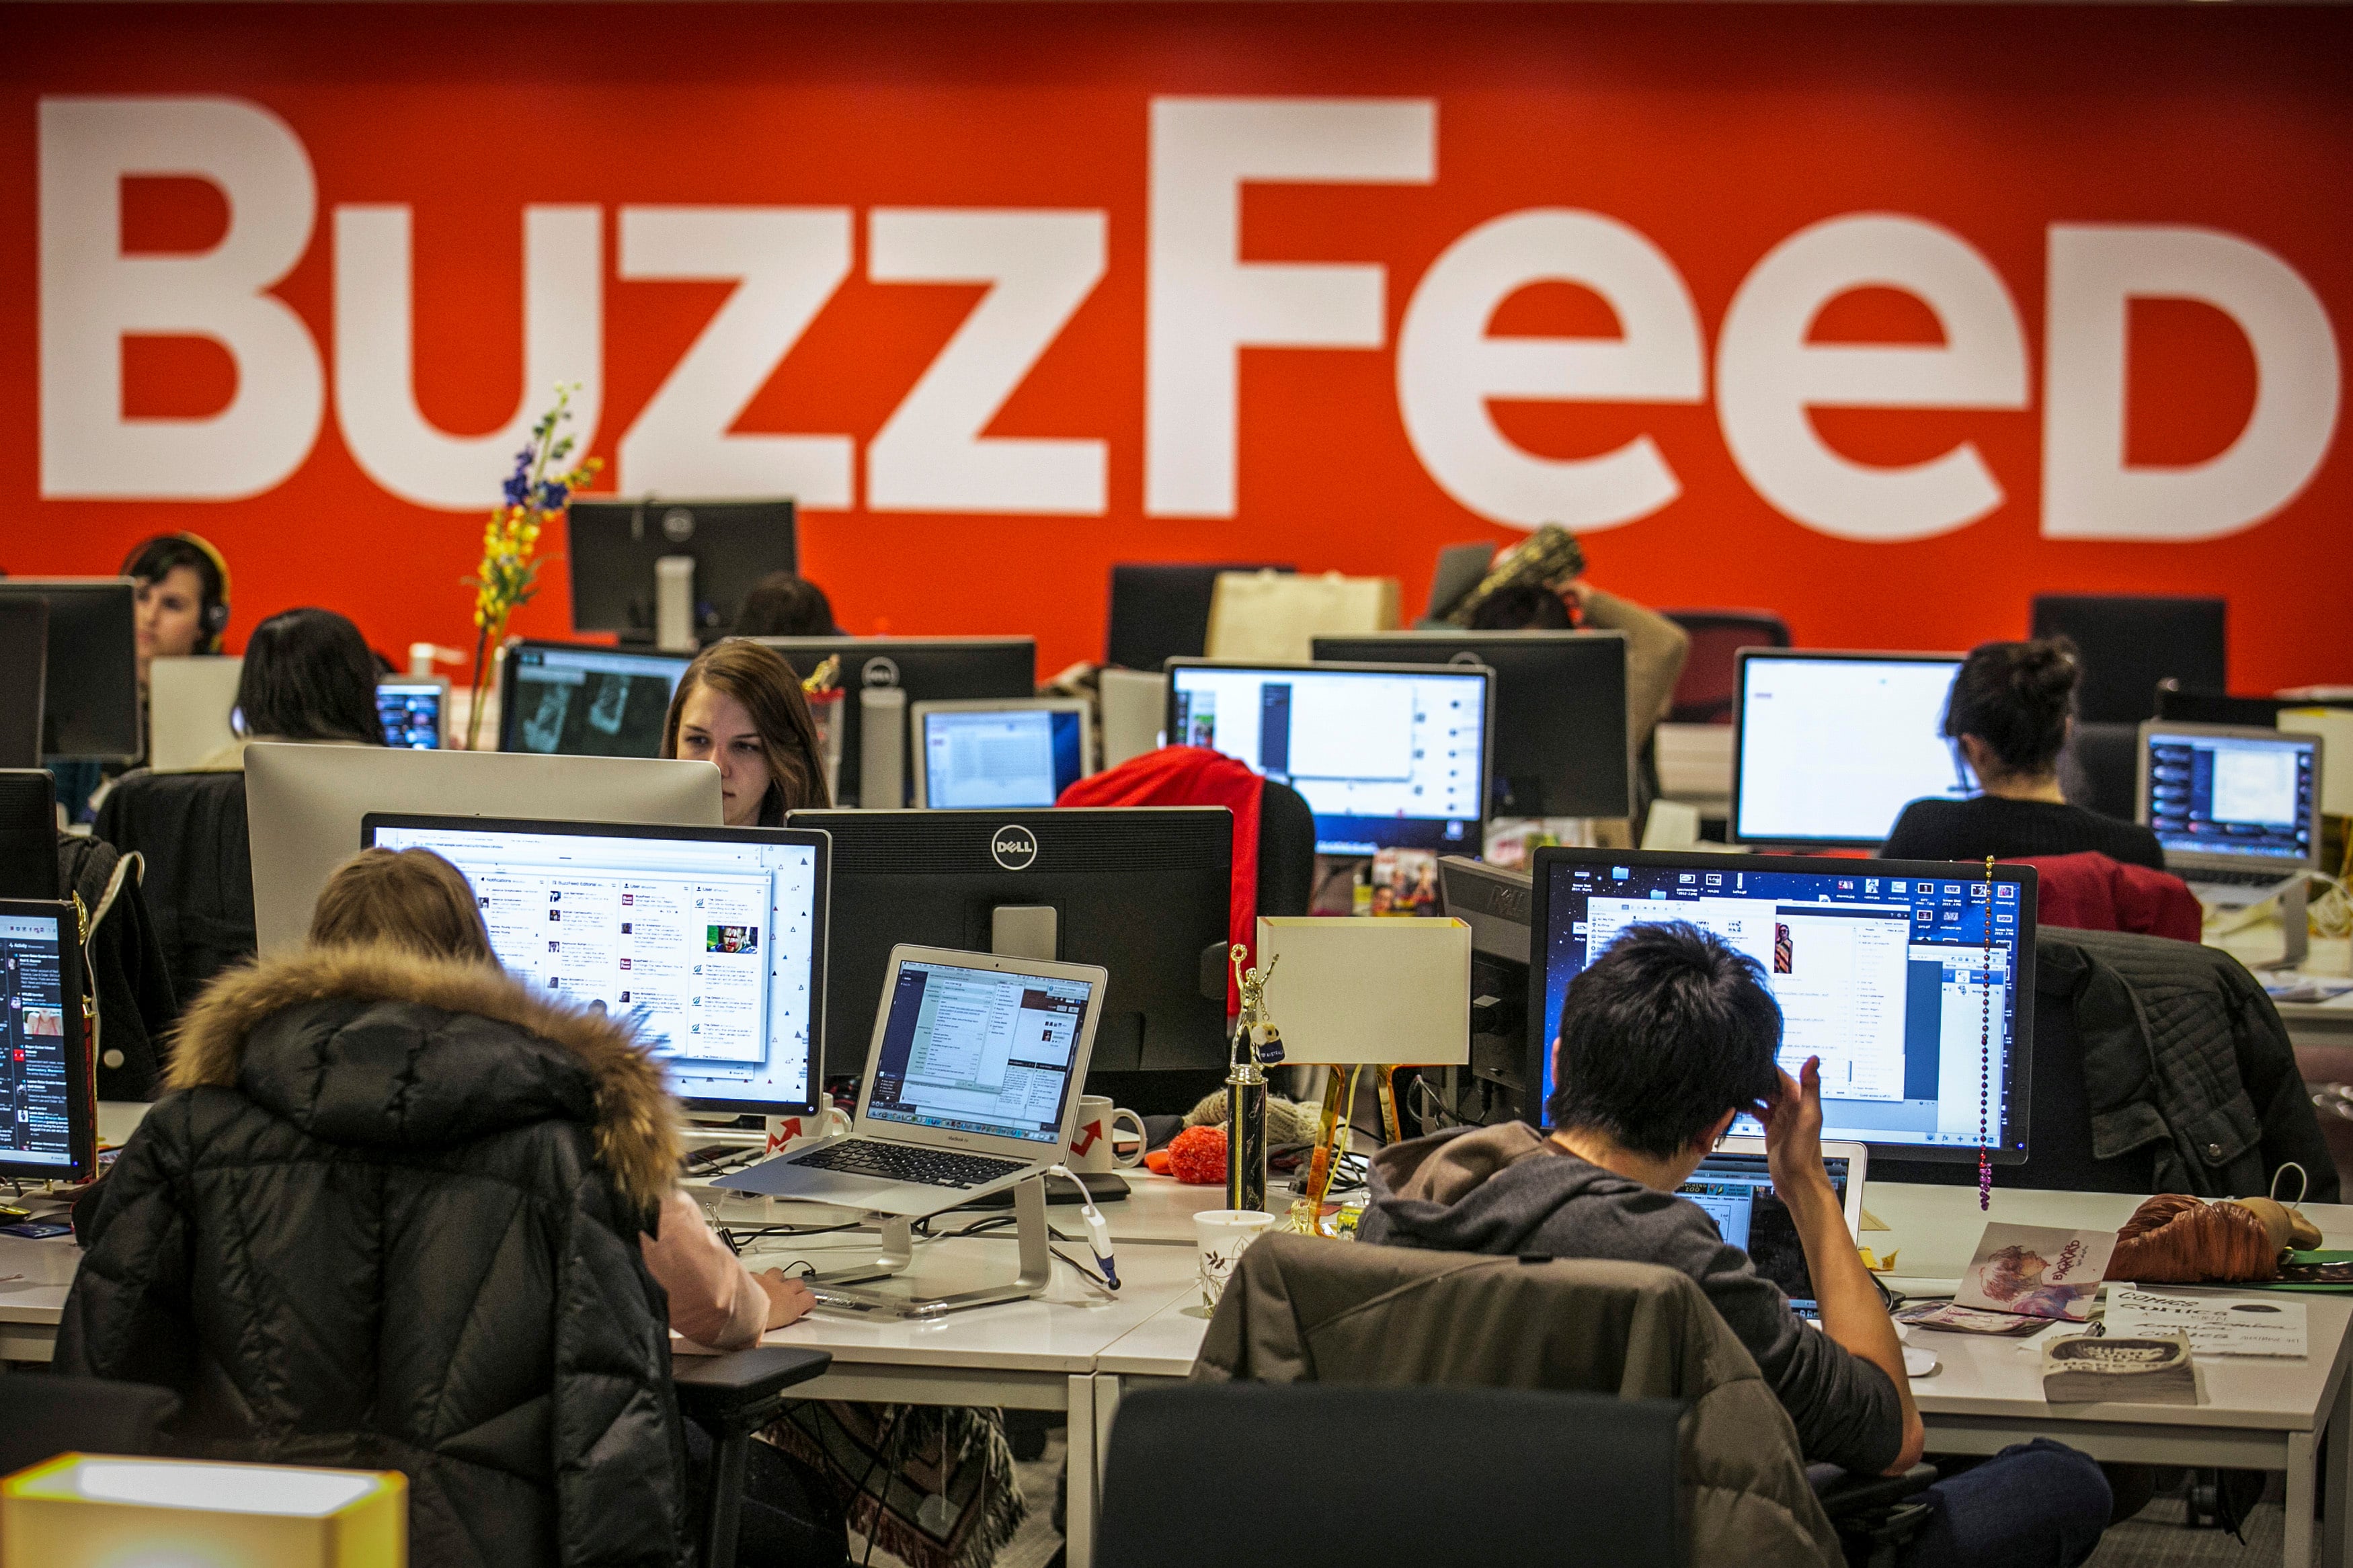 Buzzfeed newsroom